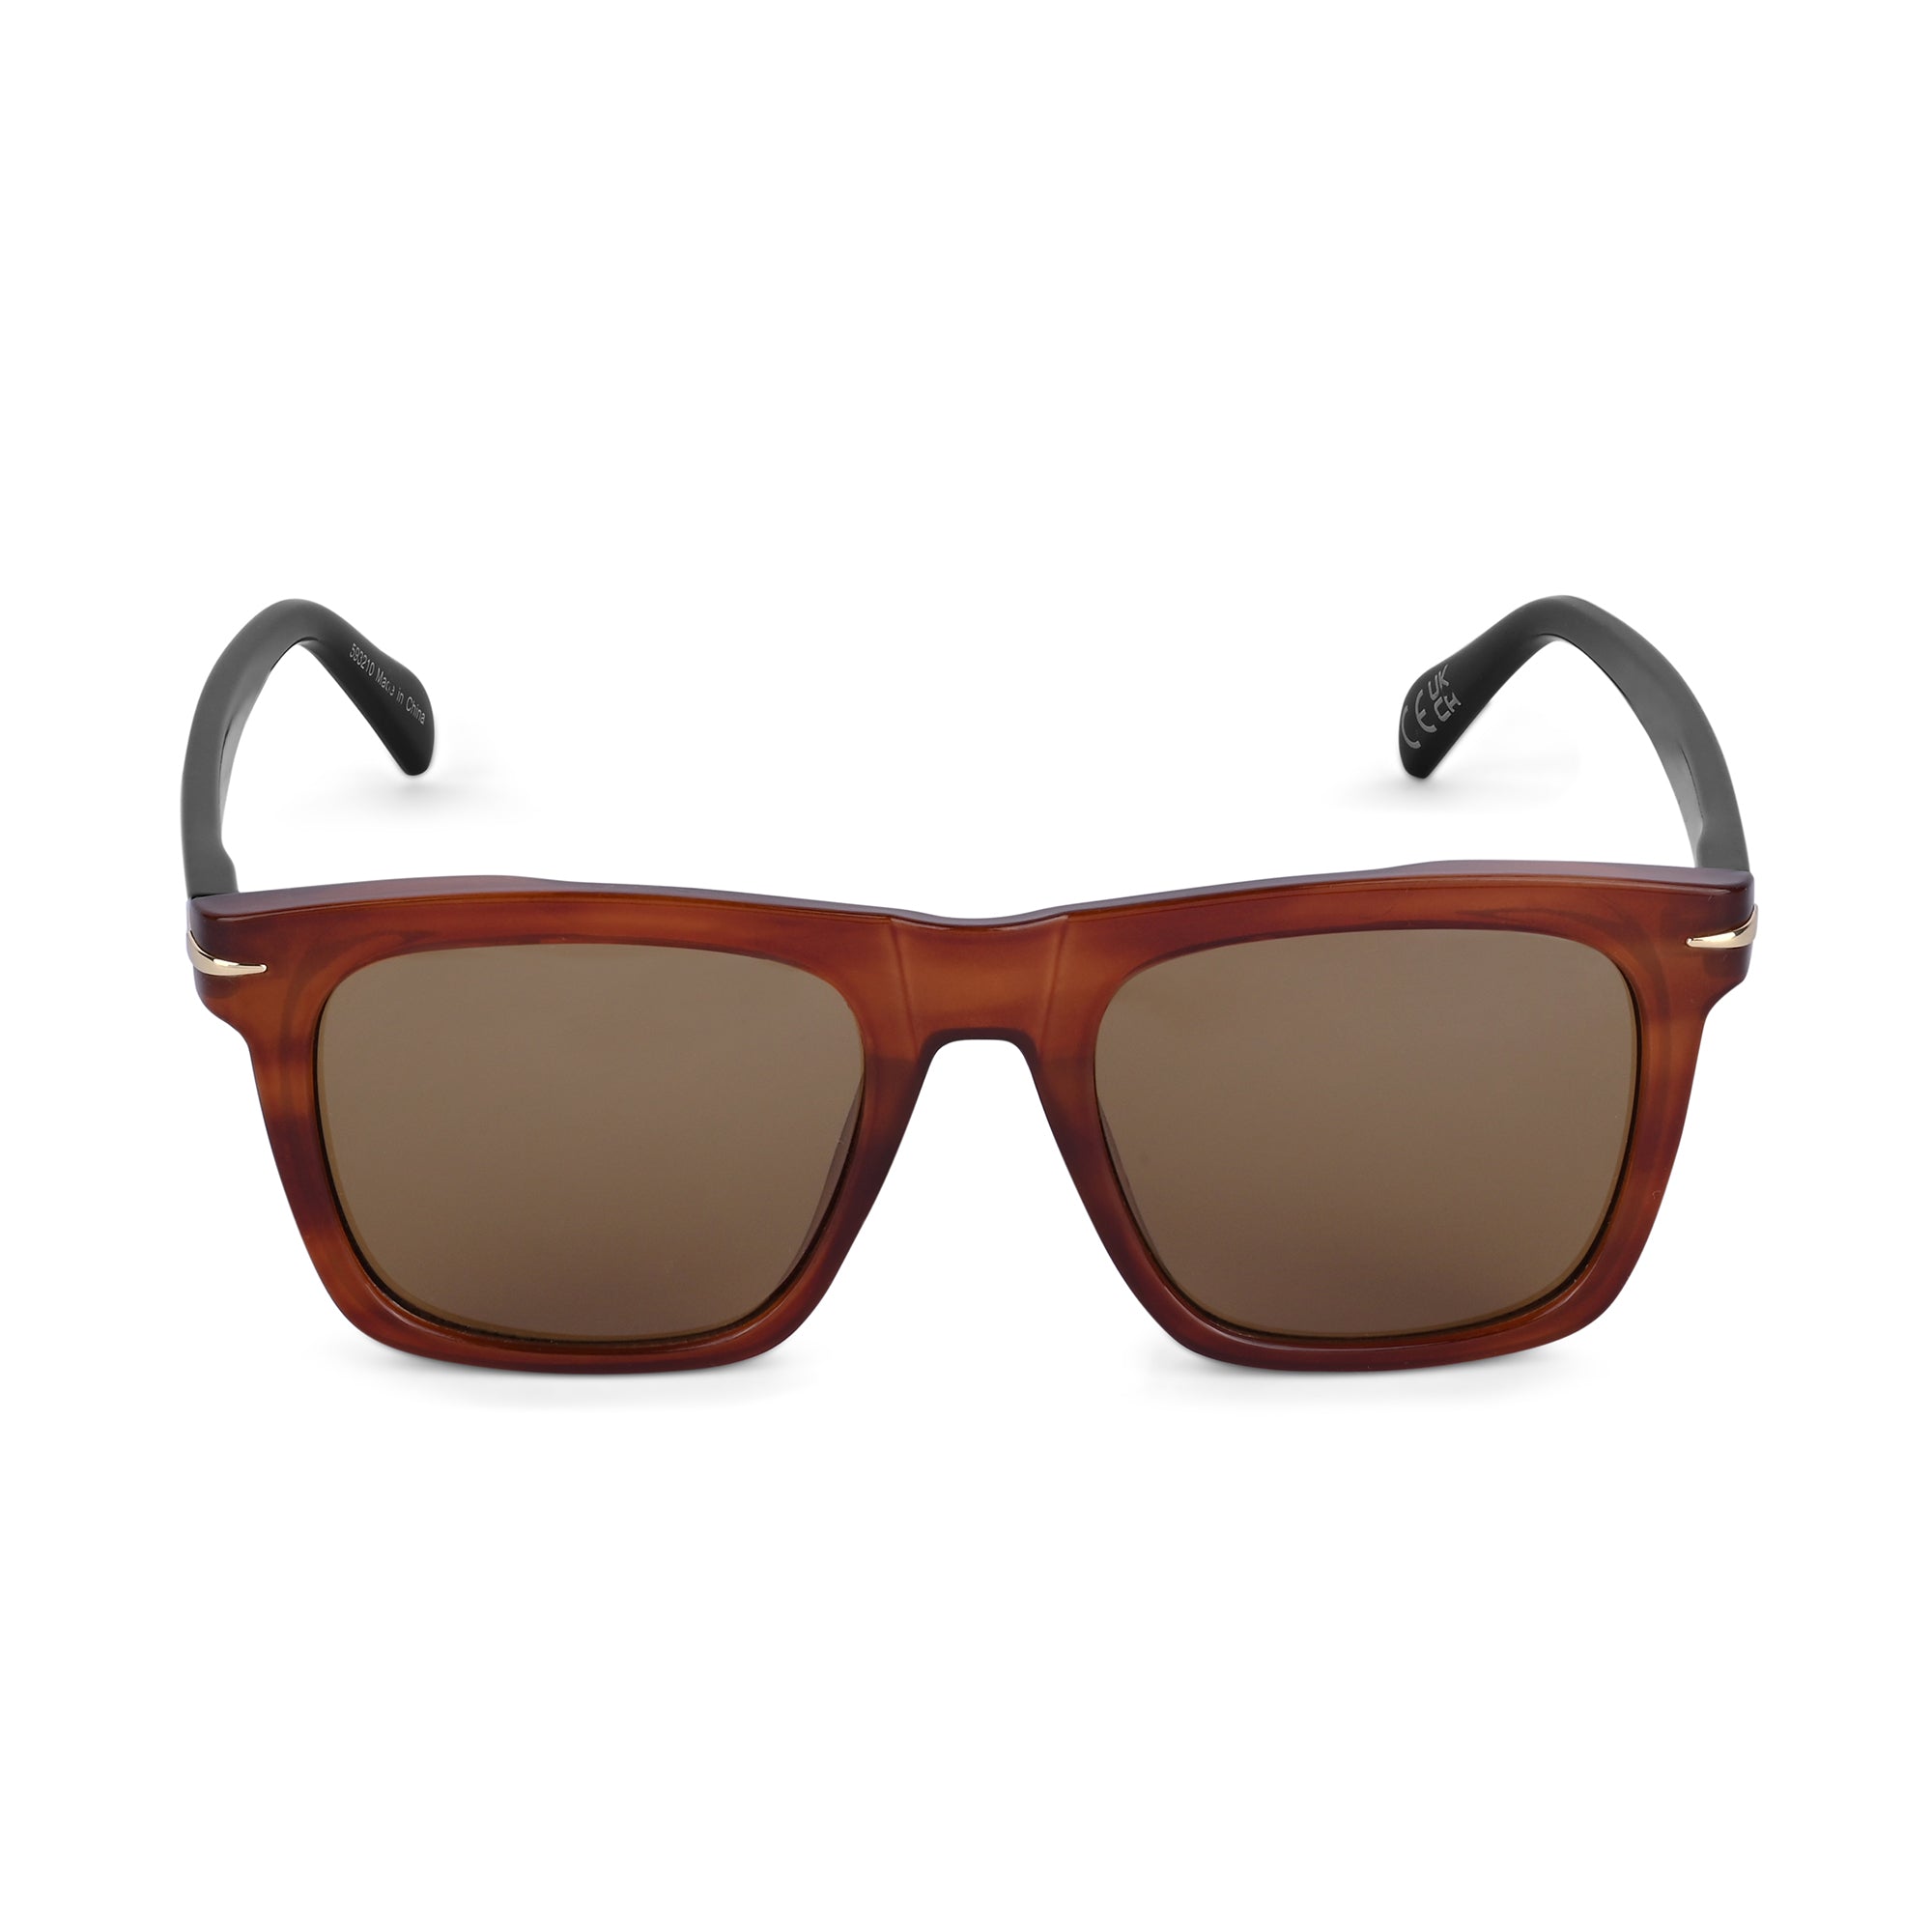 Accessorize London Women's Brown Contrast Arm Flattop Sunglasses